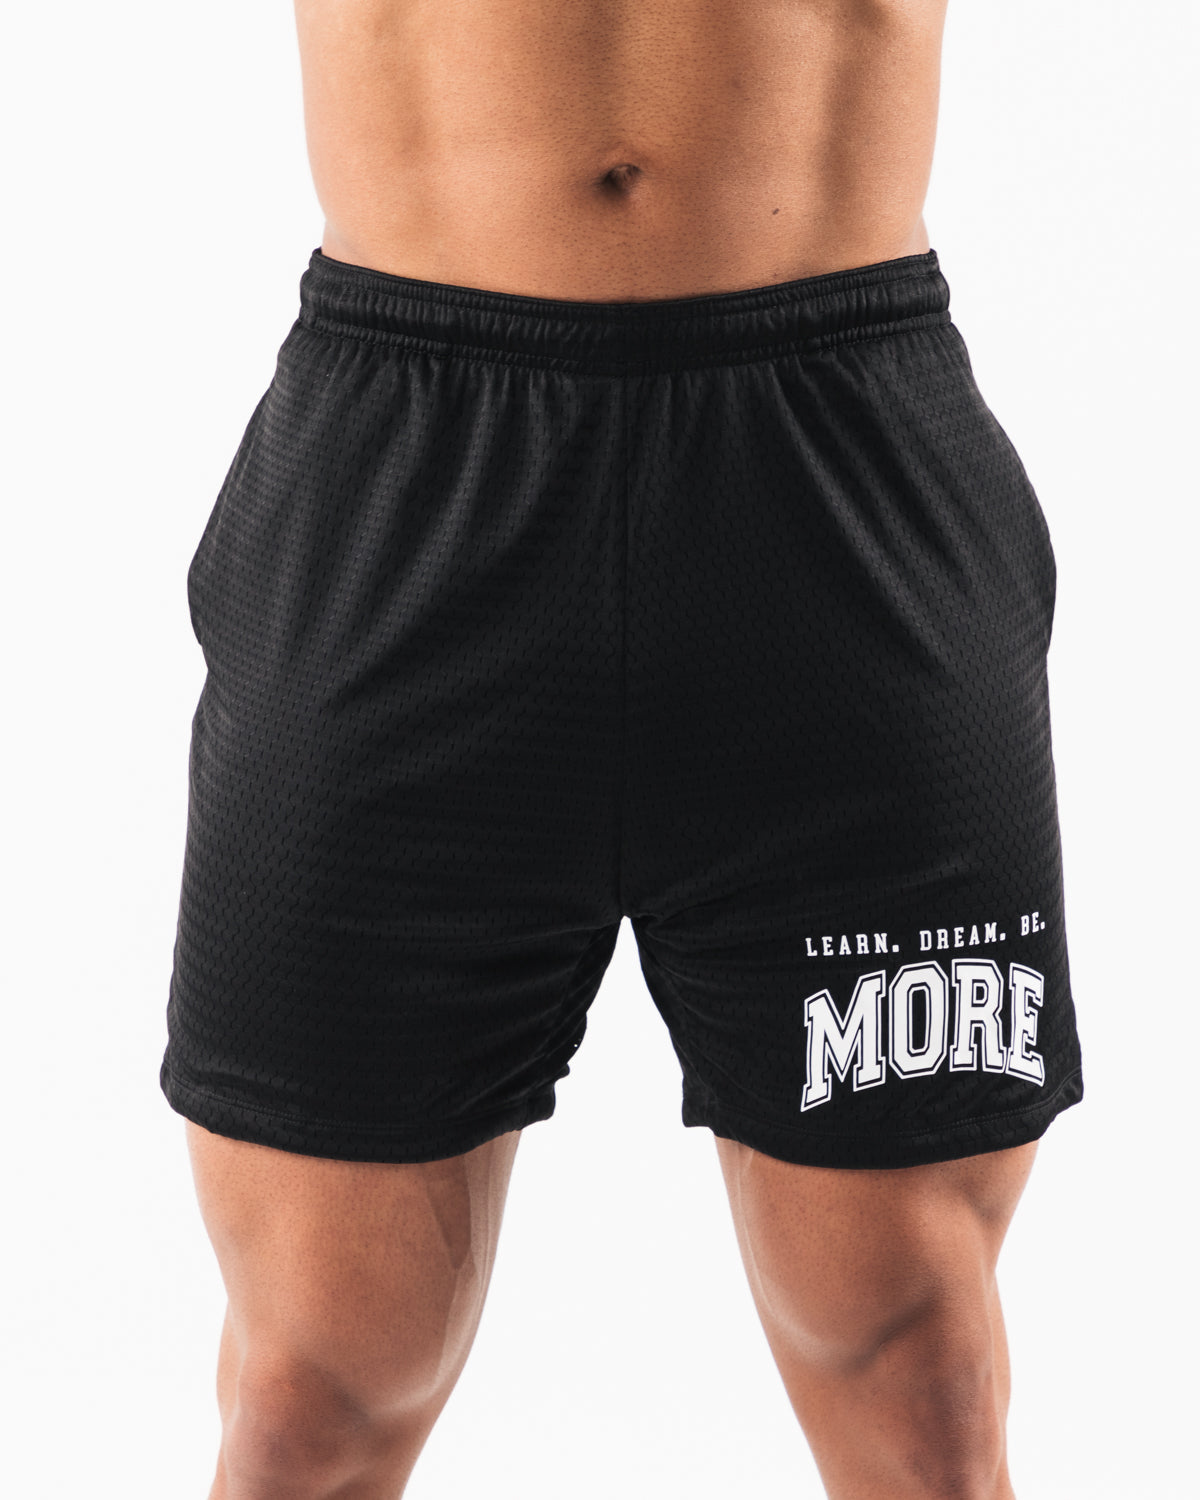 Black mm Athletic Shorts - morbid mates